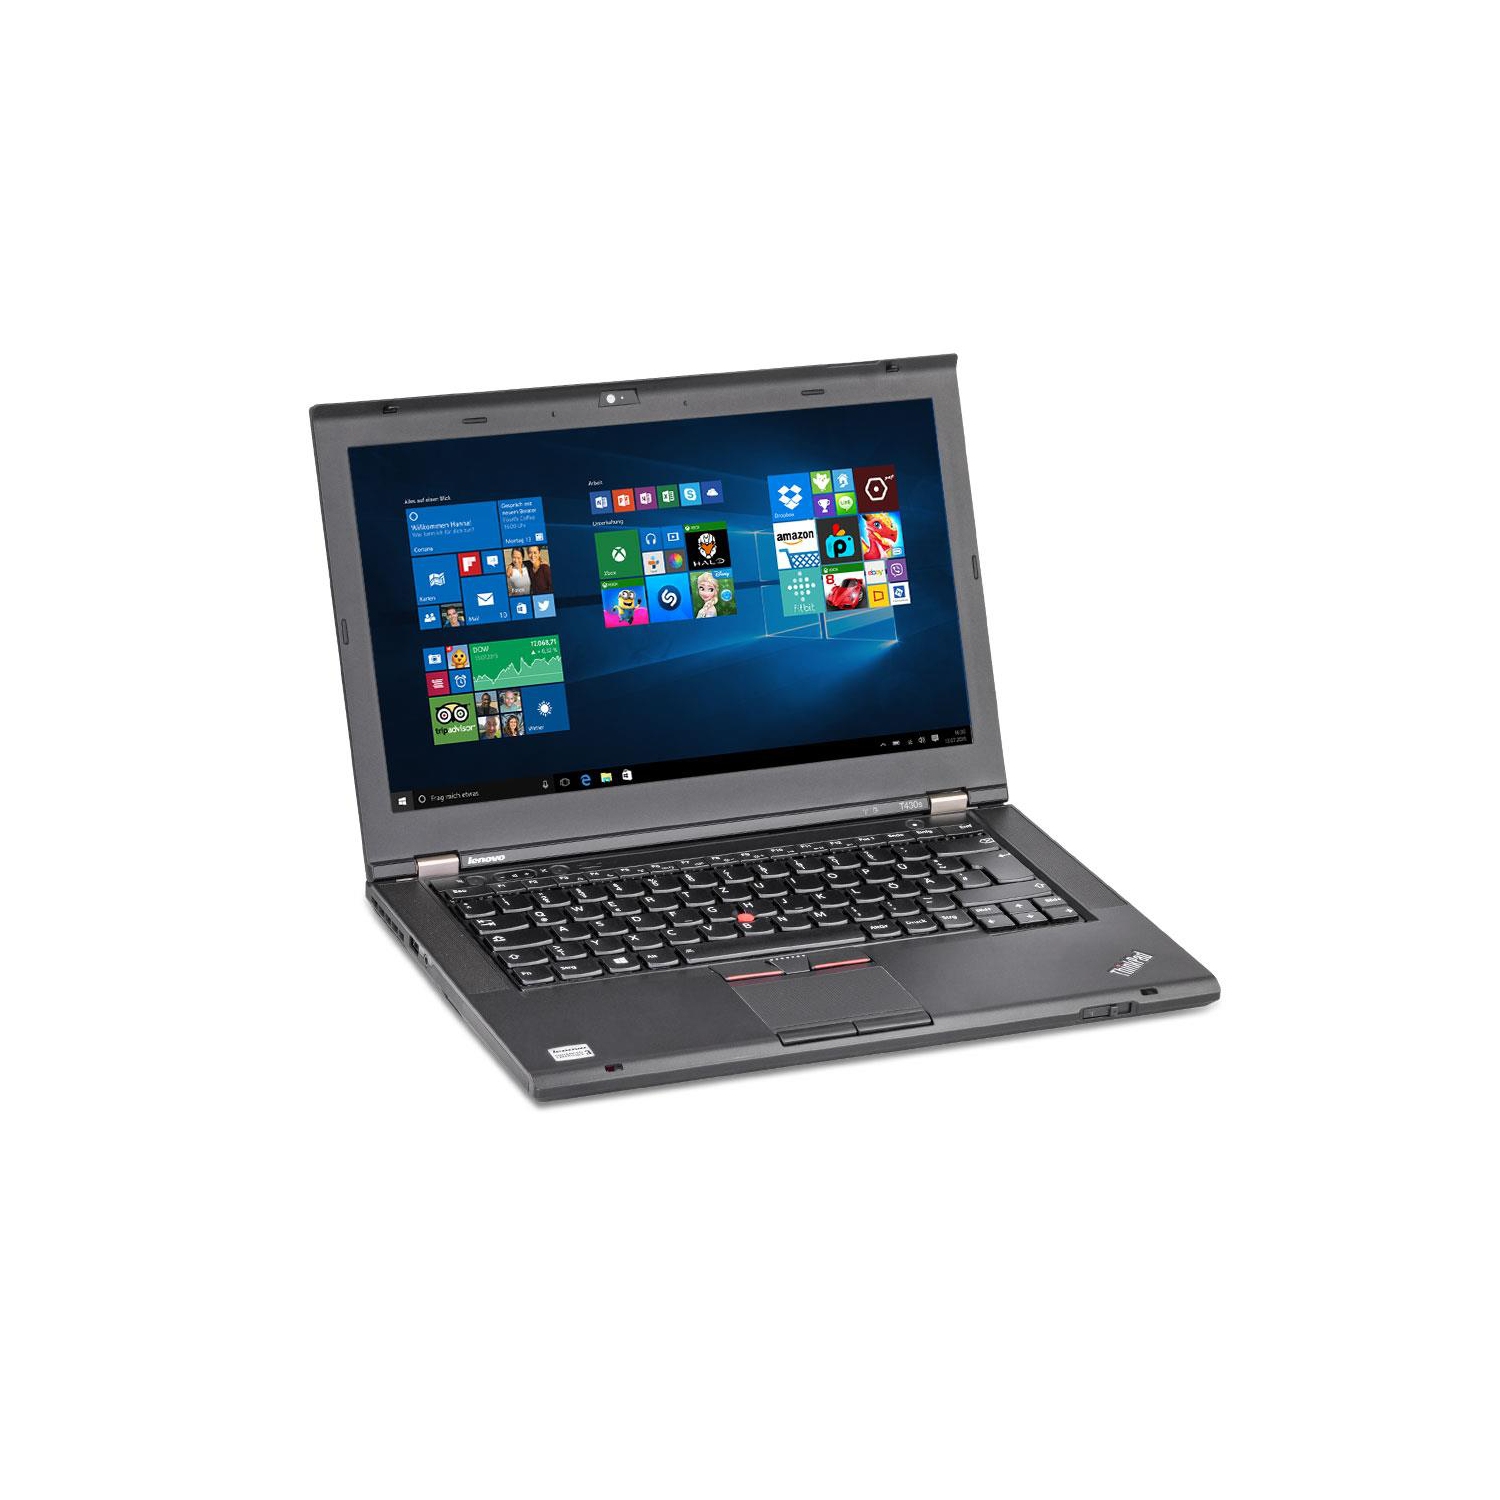 Refurbished (Good) - Lenovo Thinkpad T430s Laptop Core i5 3320m